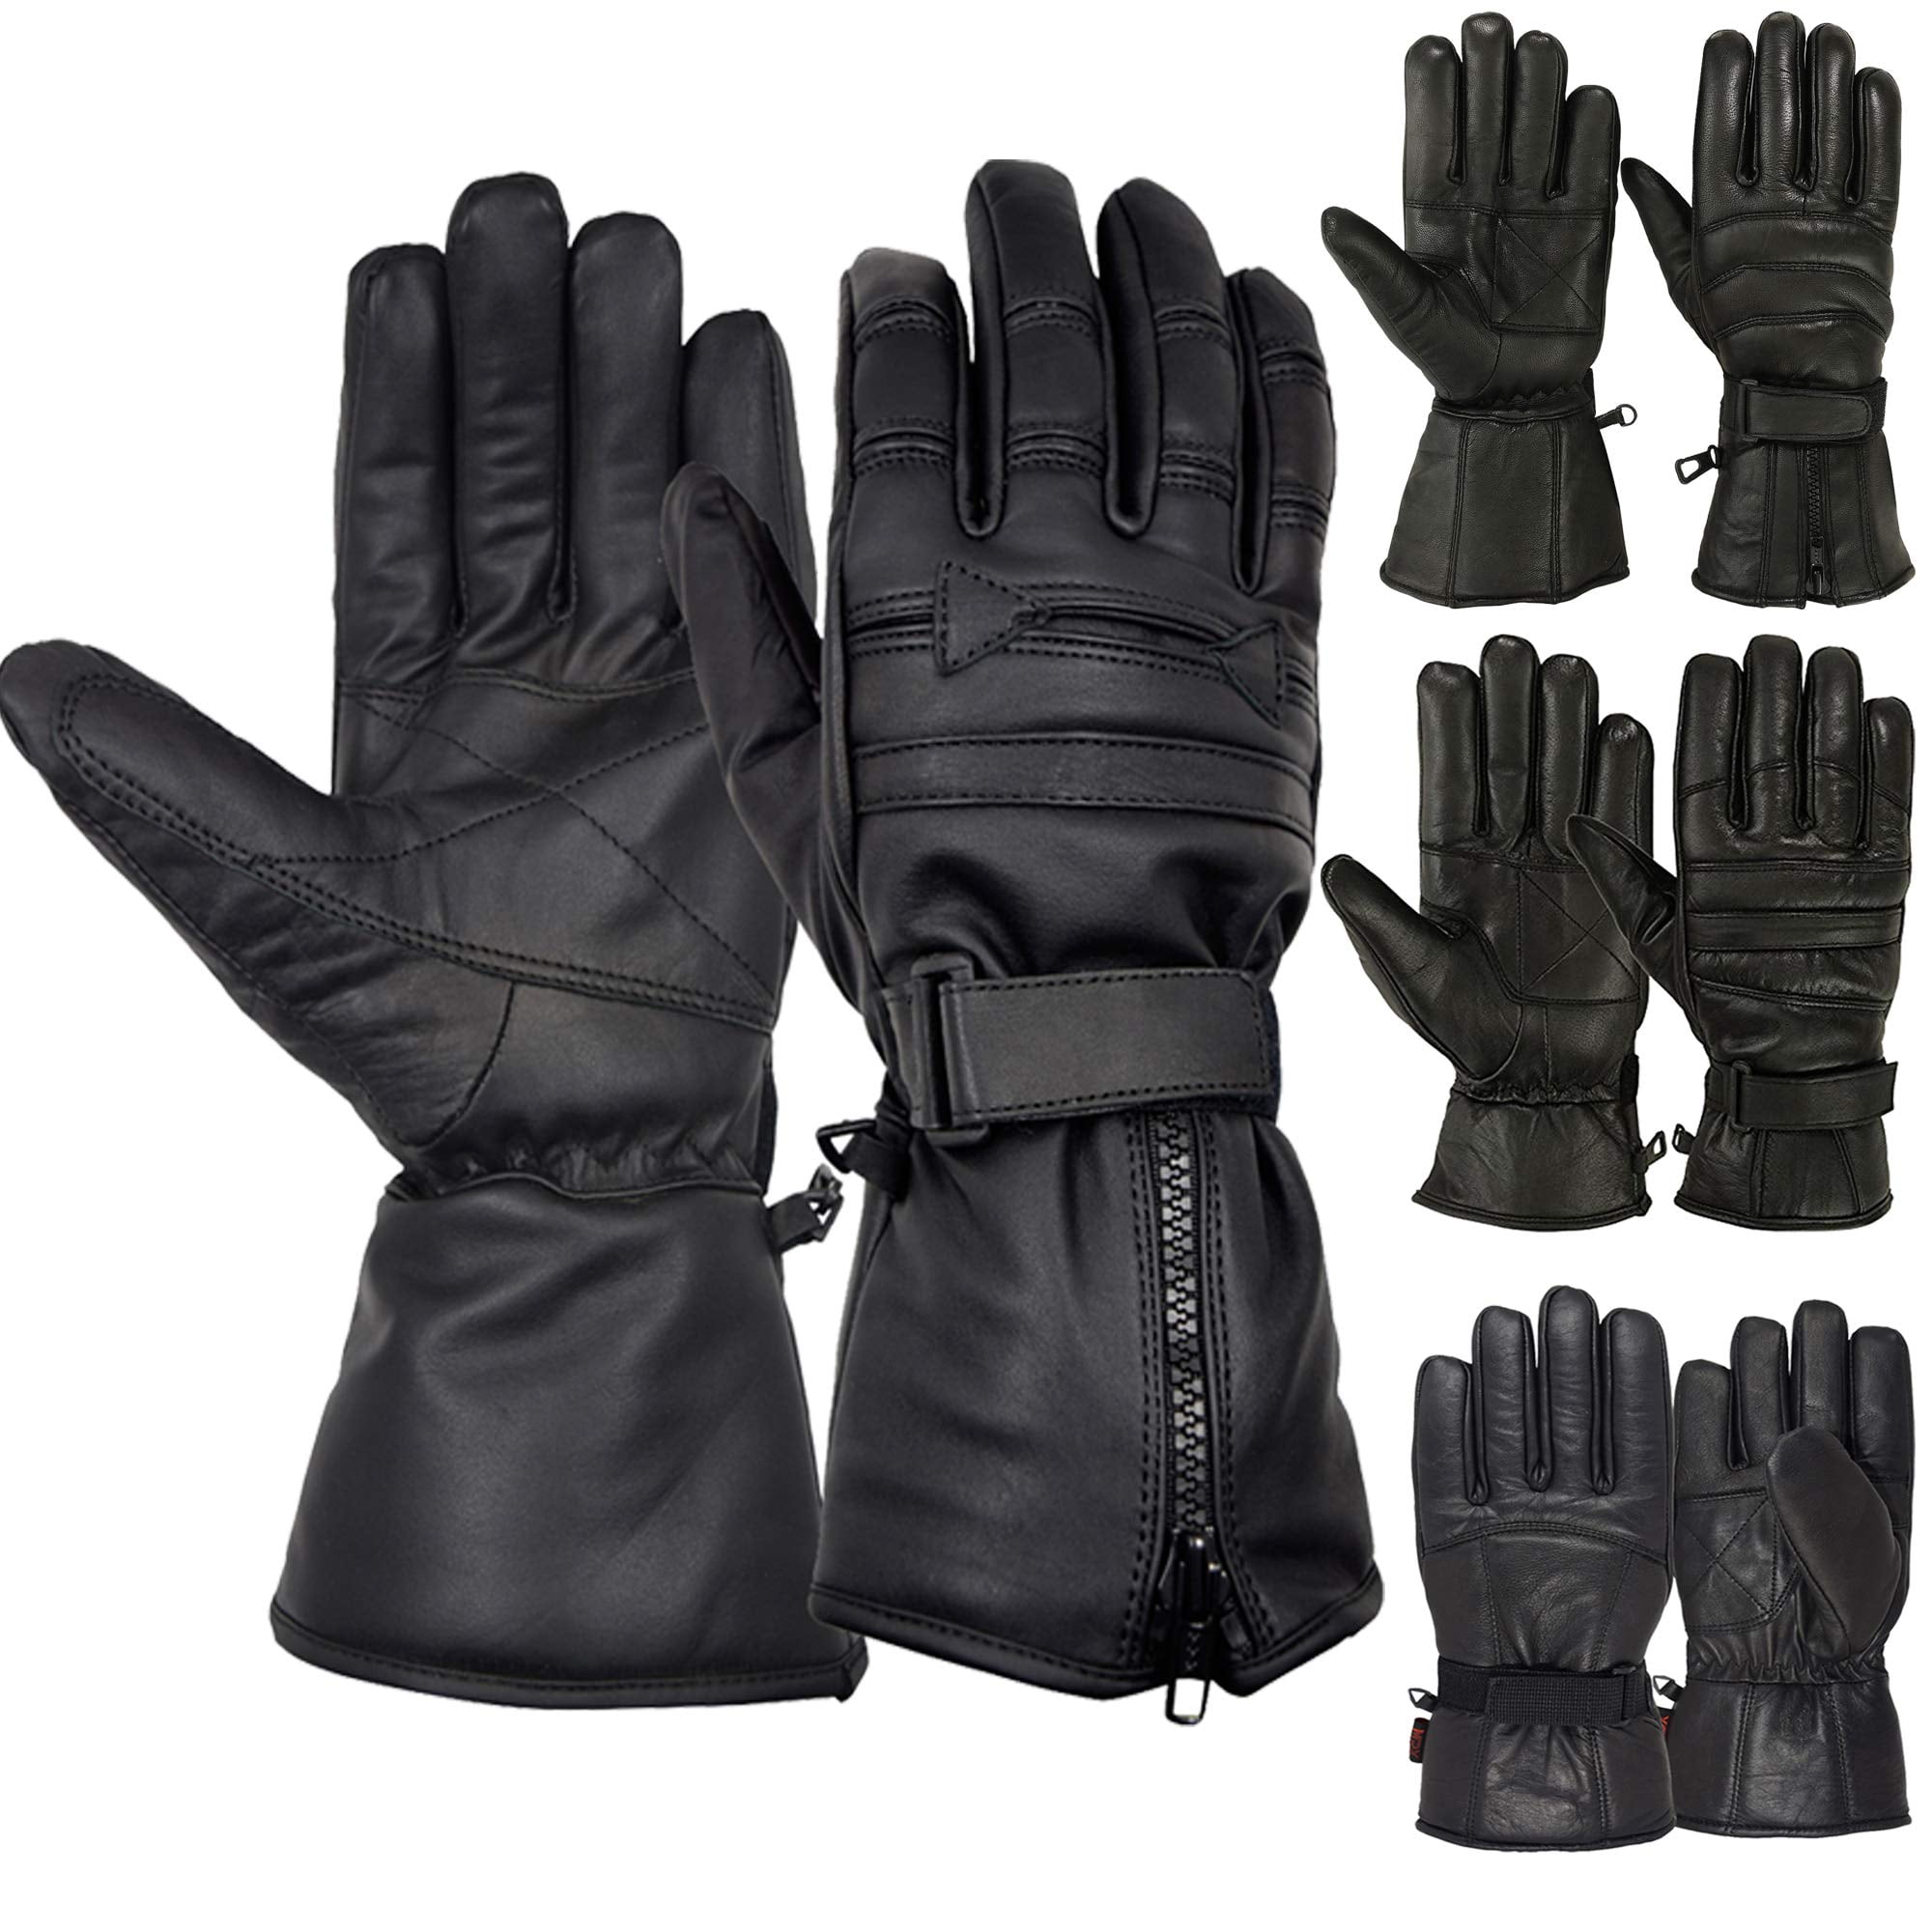 Men's Genuine Sheep Leather Winter Street Cruiser Motorcycle Thermal Gloves XL